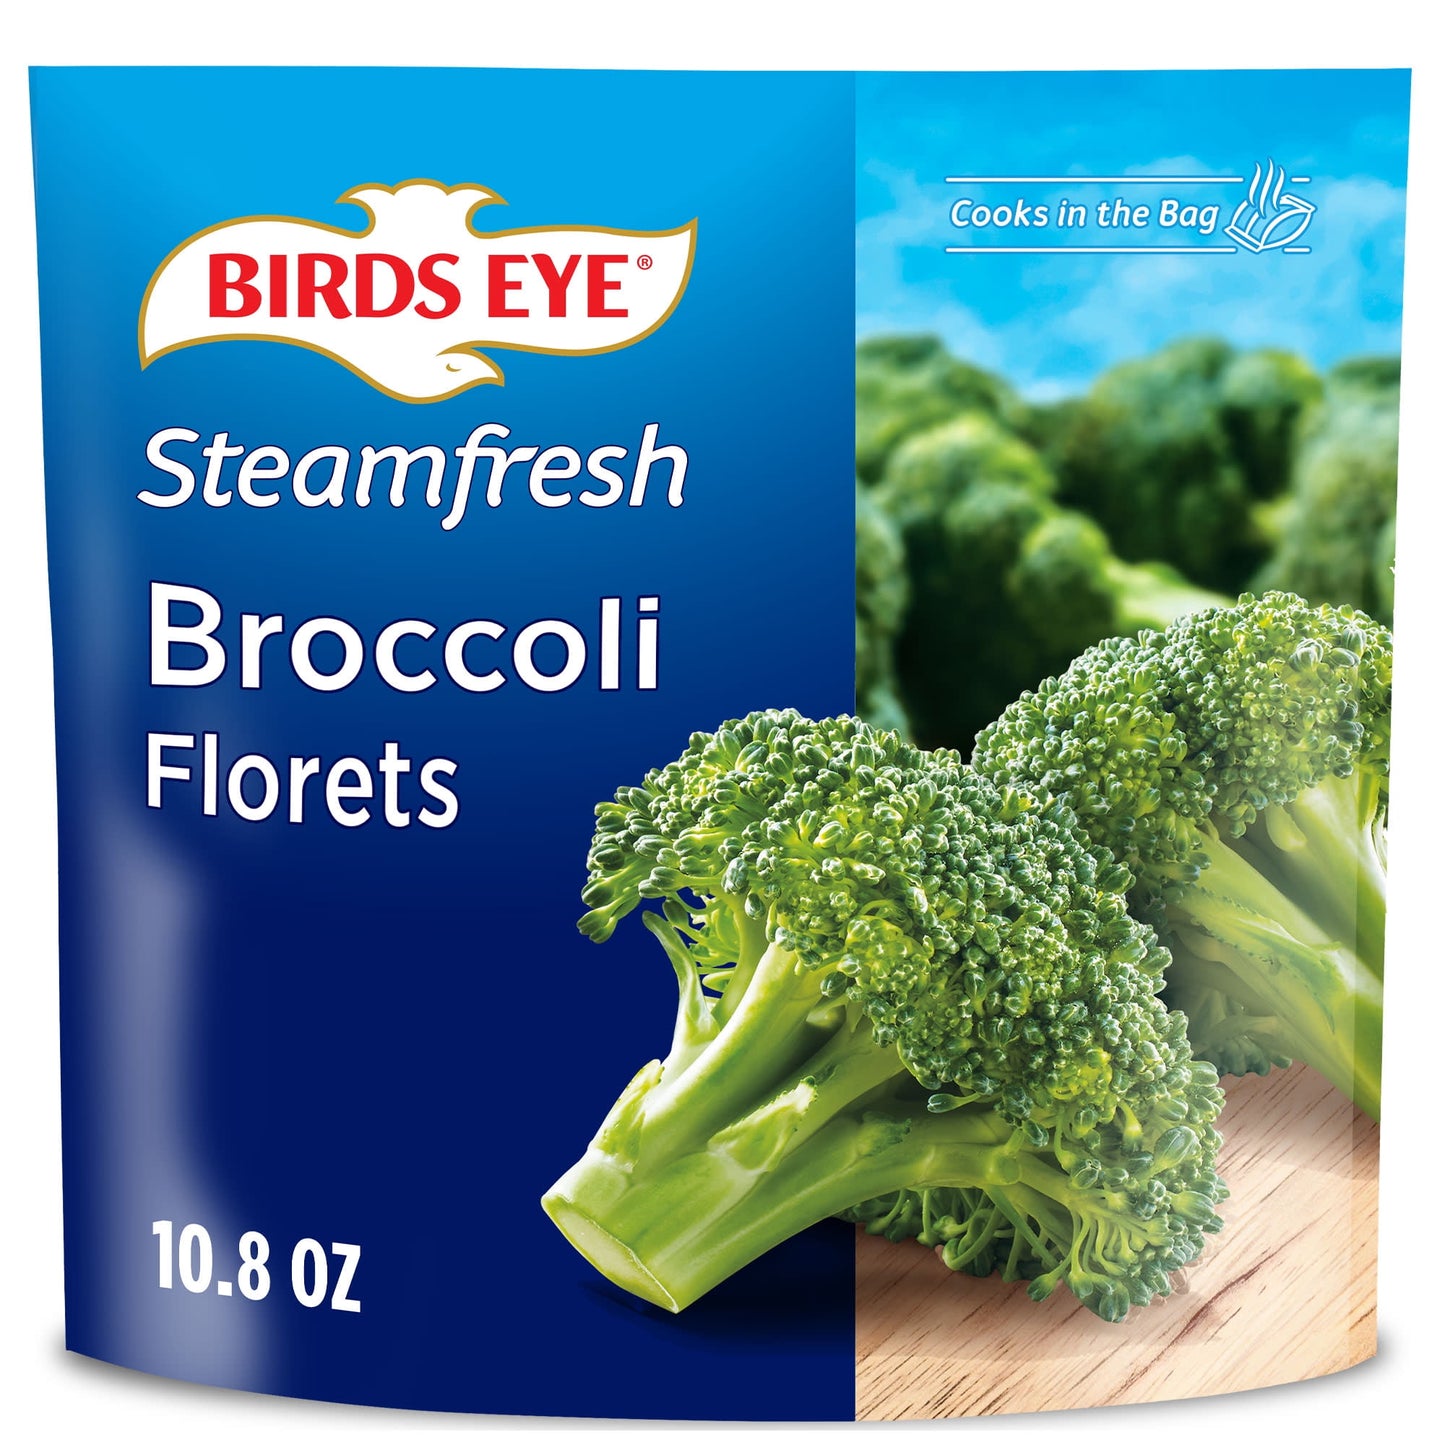 Birds Eye Steamfresh Broccoli Florets, Frozen, 10.8 oz